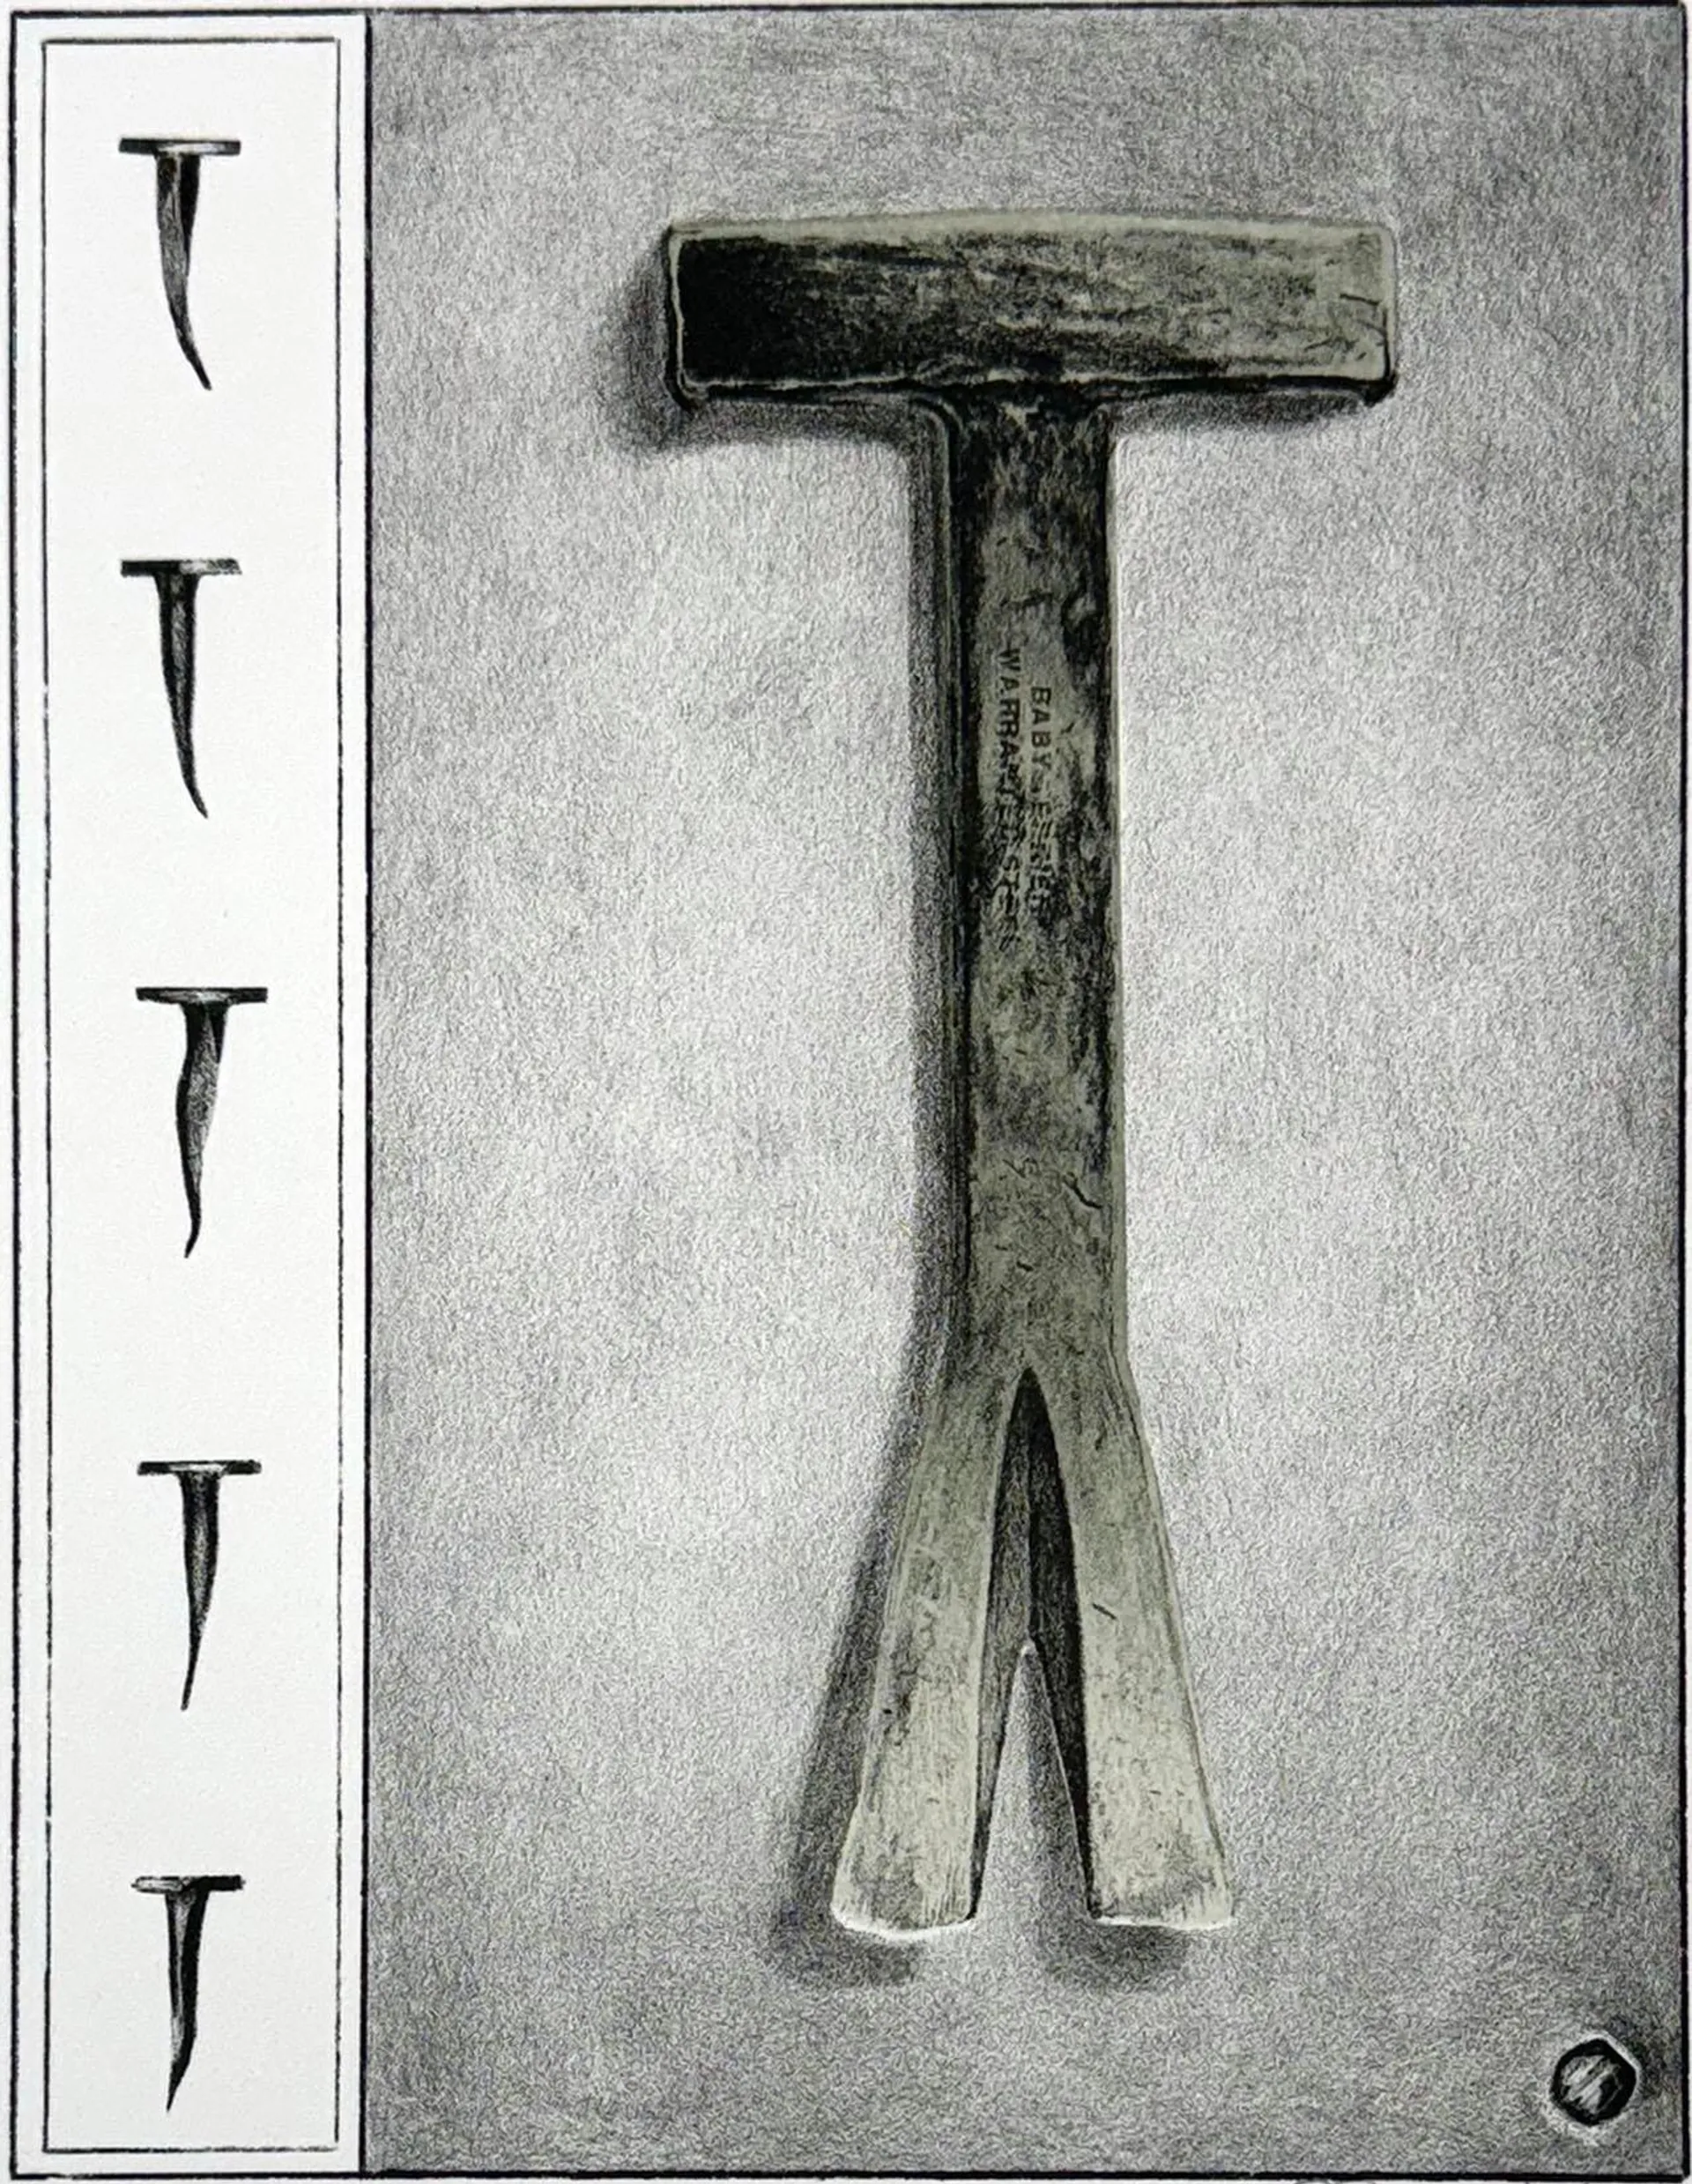 Nail Claw, lithograph by Carolyn Muskat